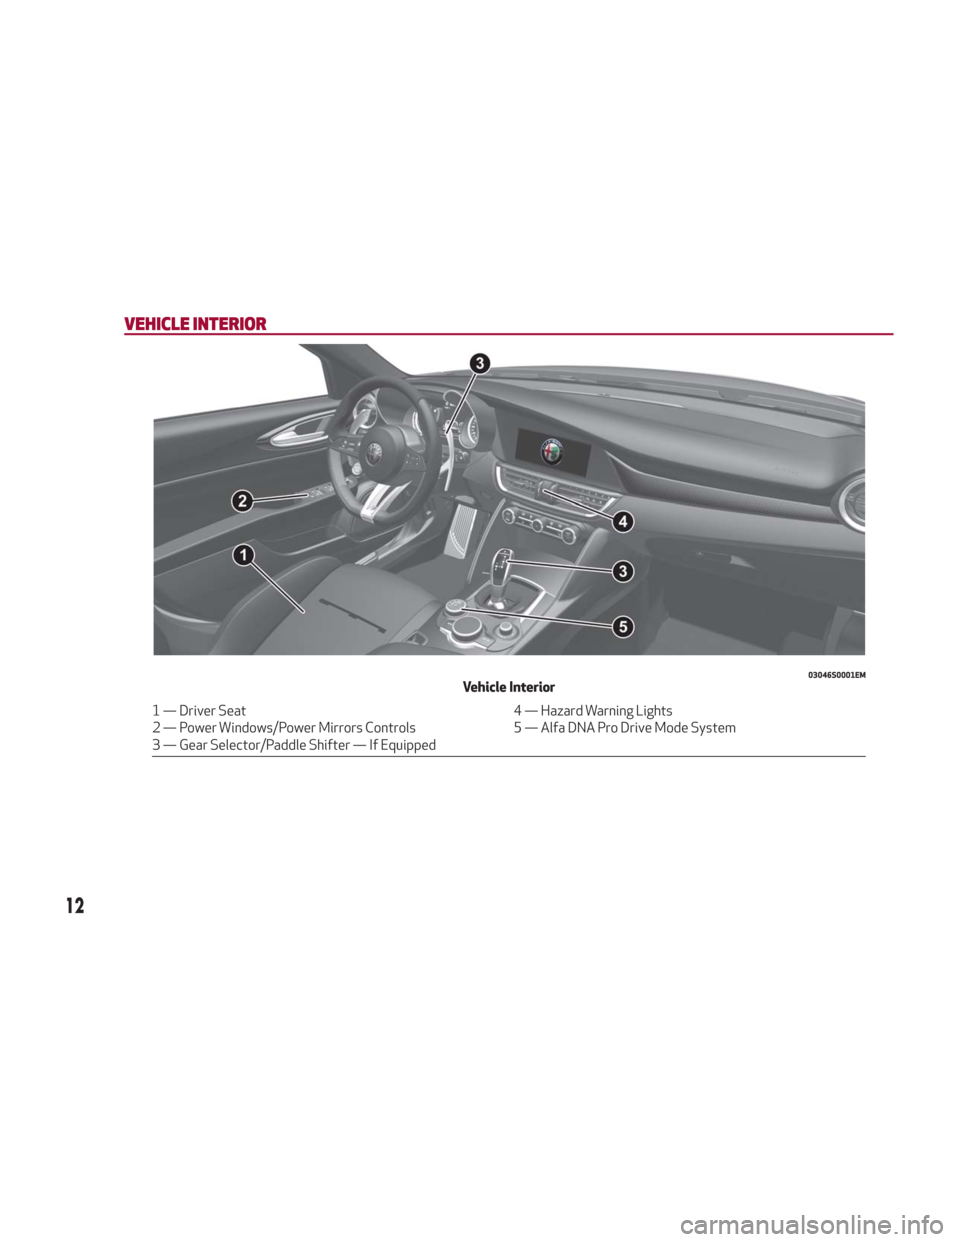 Alfa Romeo Giulia 2018  Owners Manual VEHICLE INTERIOR
03046S0001EMVehicle Interior
1 — Driver Seat4 — Hazard Warning Lights
2 — Power Windows/Power Mirrors Controls 5 — Alfa DNA Pro Drive Mode System
3 — Gear Selector/Paddle Sh